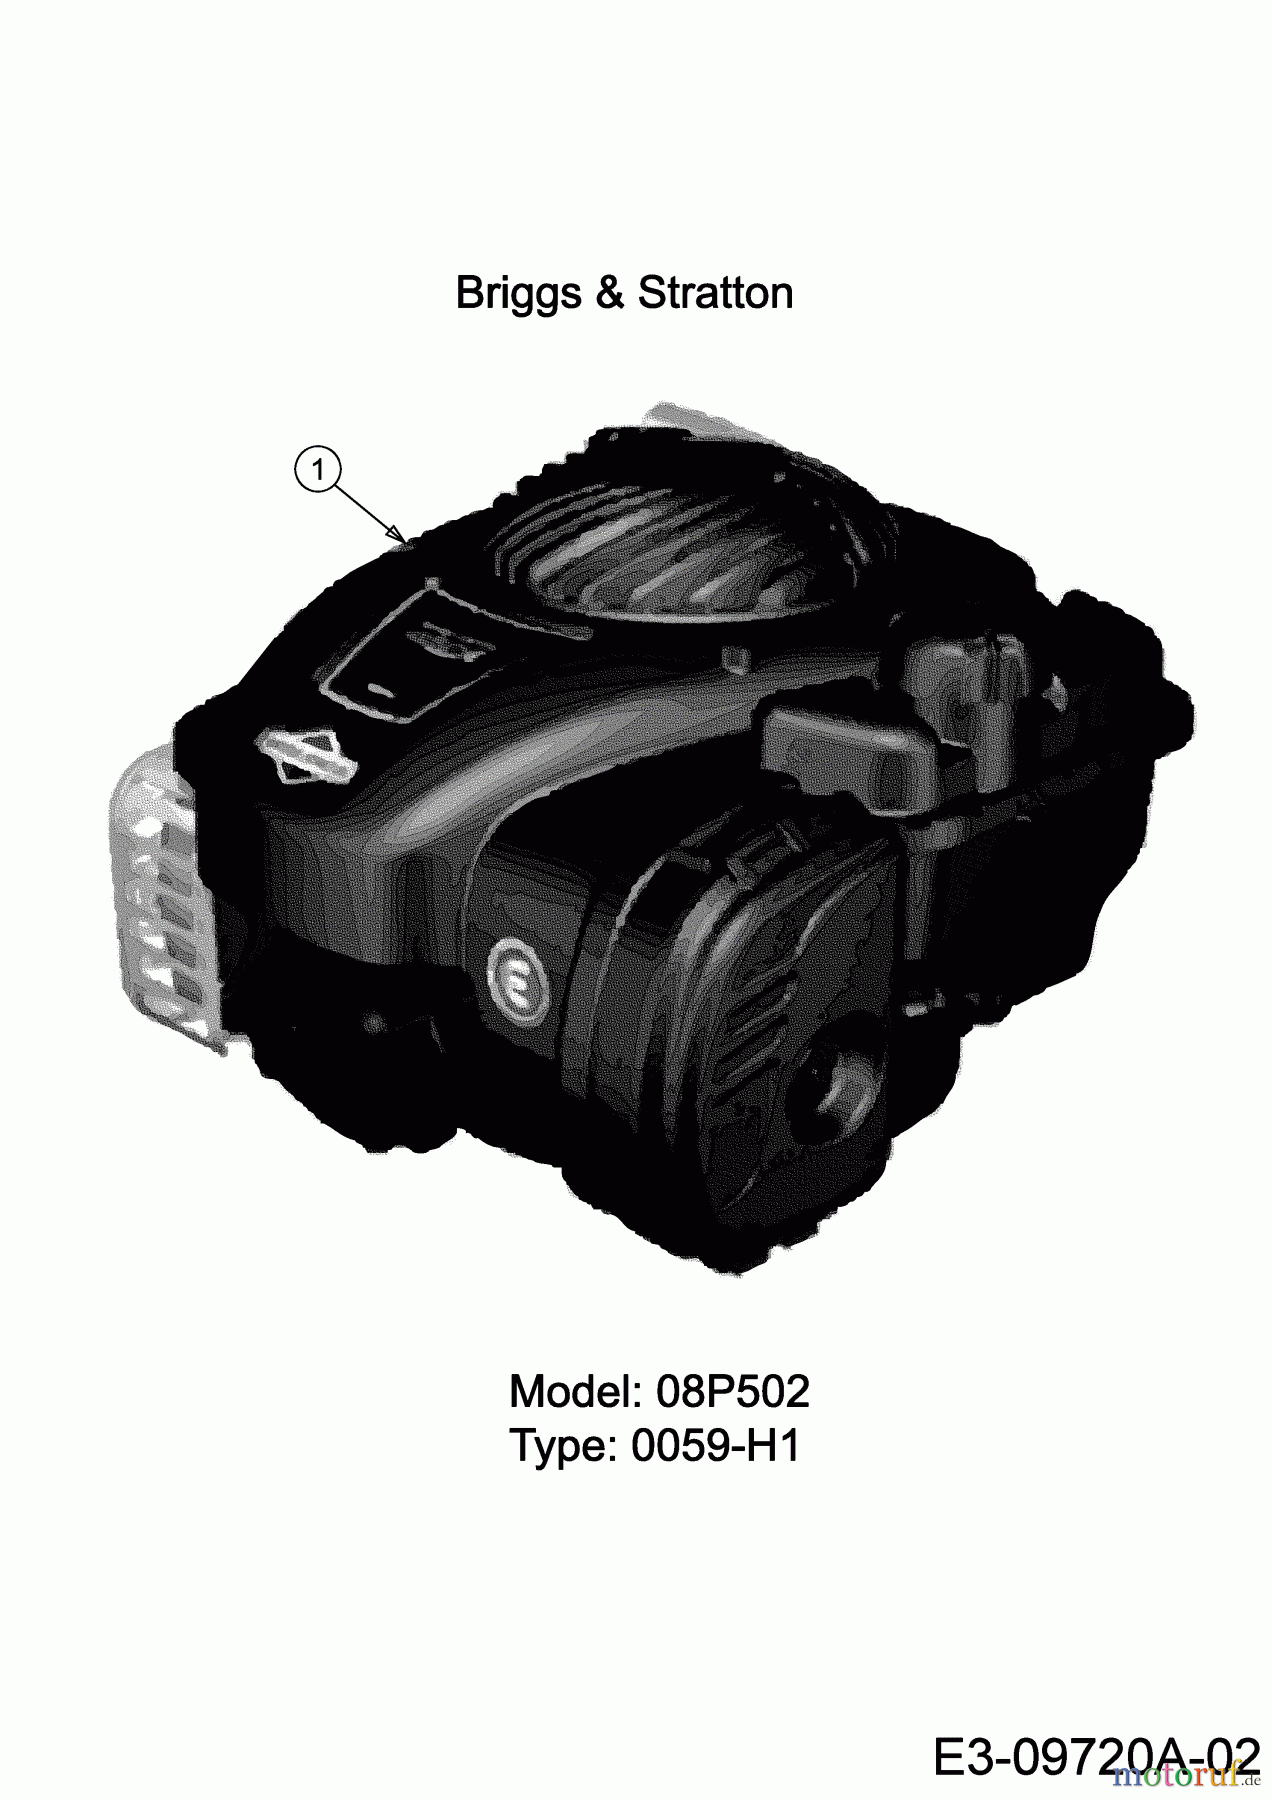  MTD Motormäher 51 BC 11D-025J600 (2019) Motor Briggs & Stratton